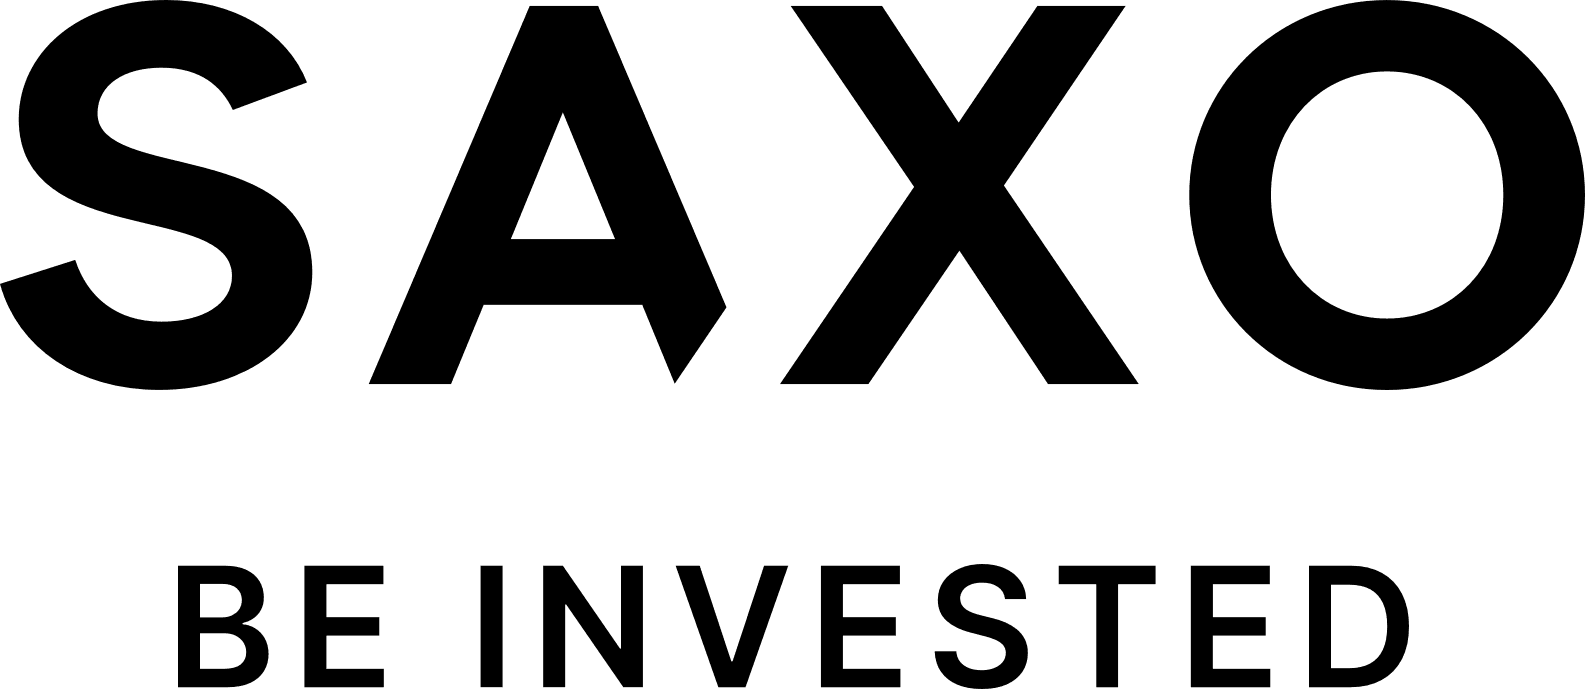 Saxo Bank Group